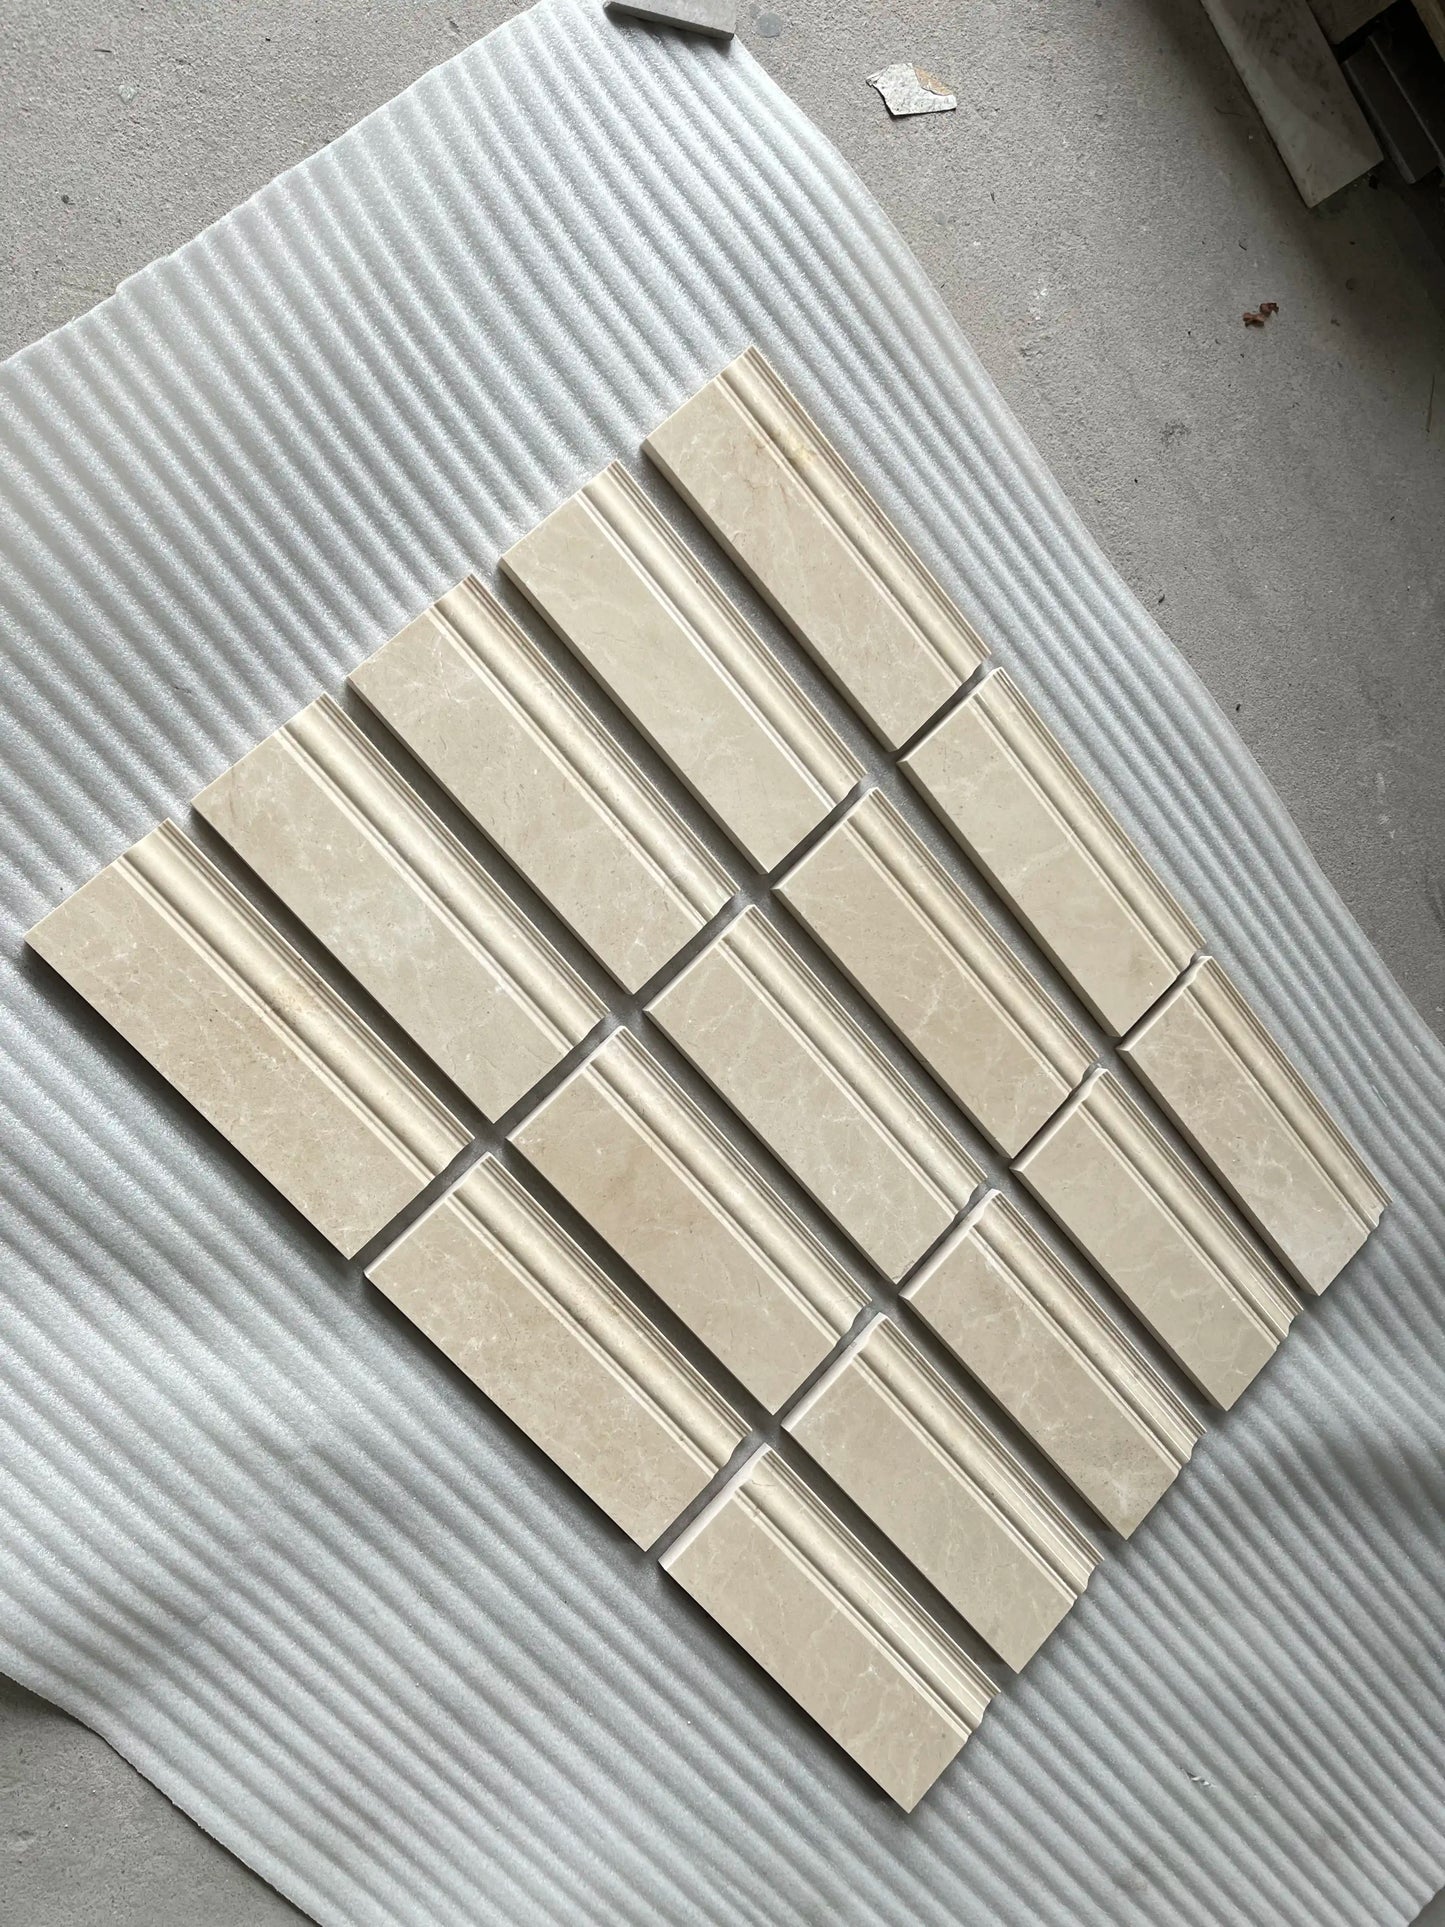 Crema Marfil Polished Baseboard Trim Tile 4 3/4x12"